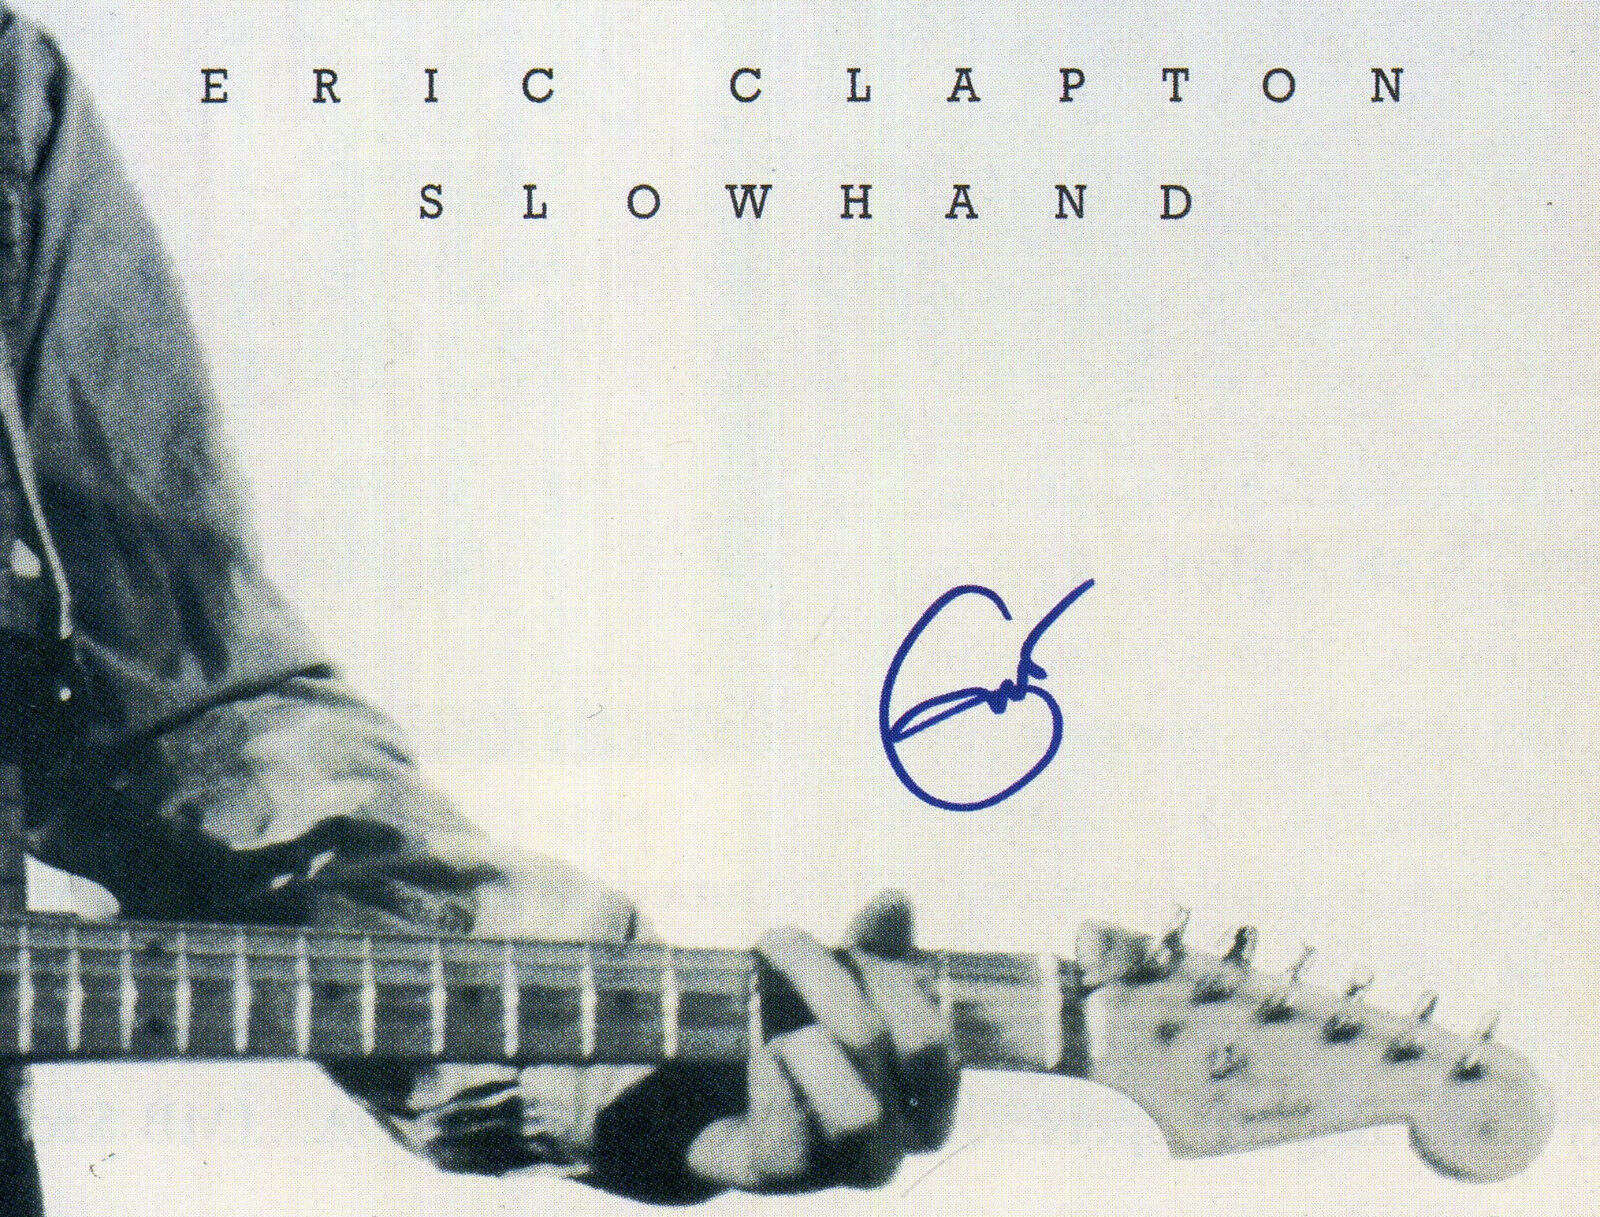 ERIC CLAPTON Signed 'Slowhand' Photo Poster paintinggraph - B&W Rock Singer Guitarist - preprint